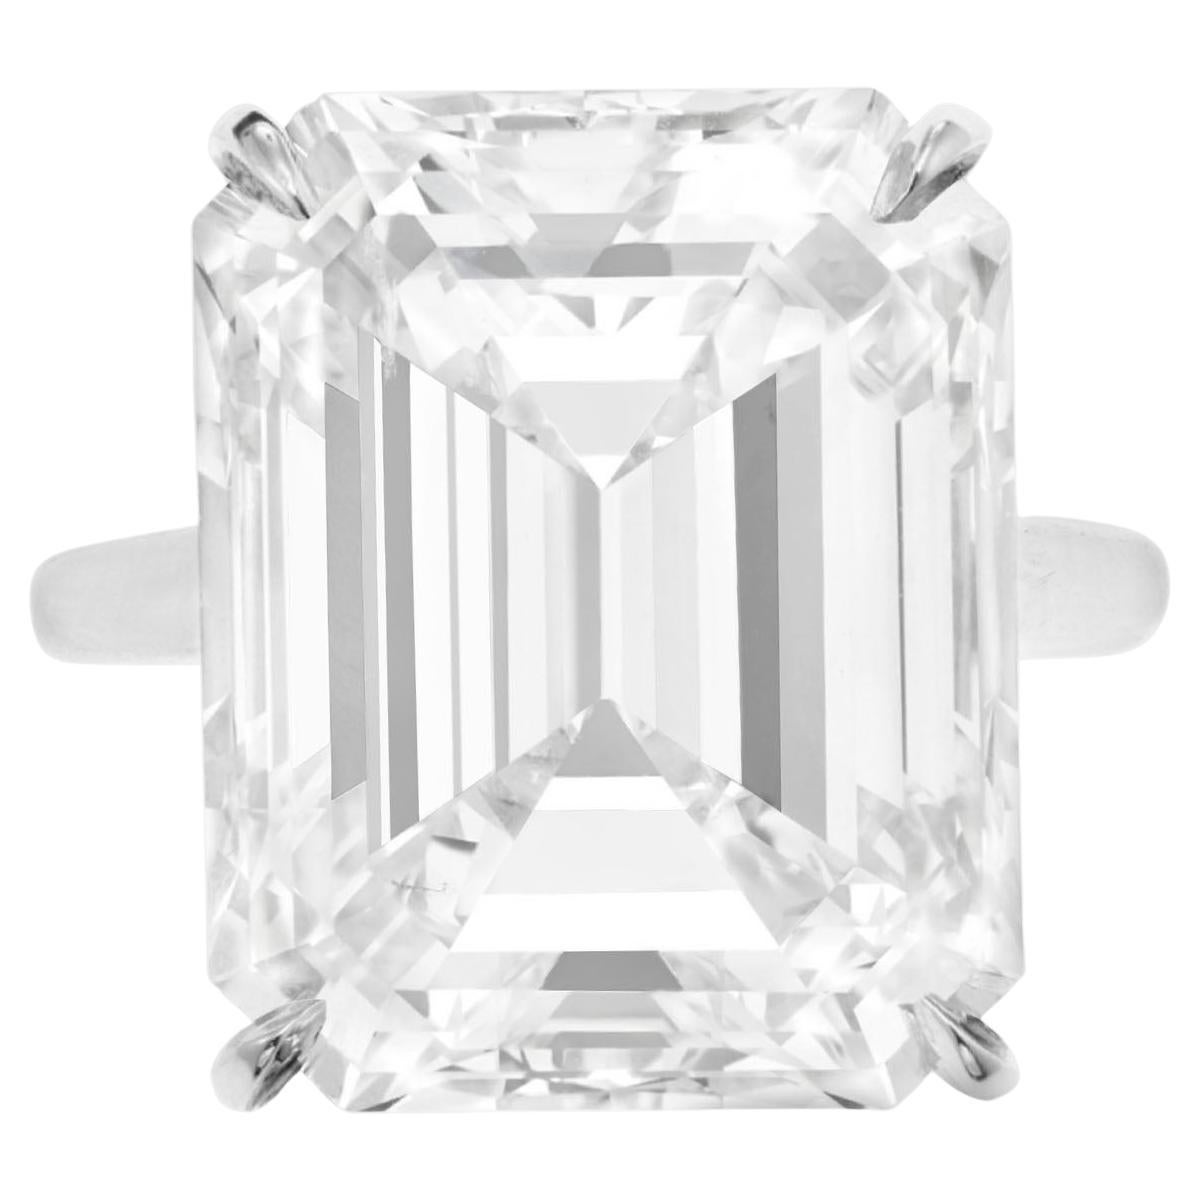 10 carat diamond ring emerald cut